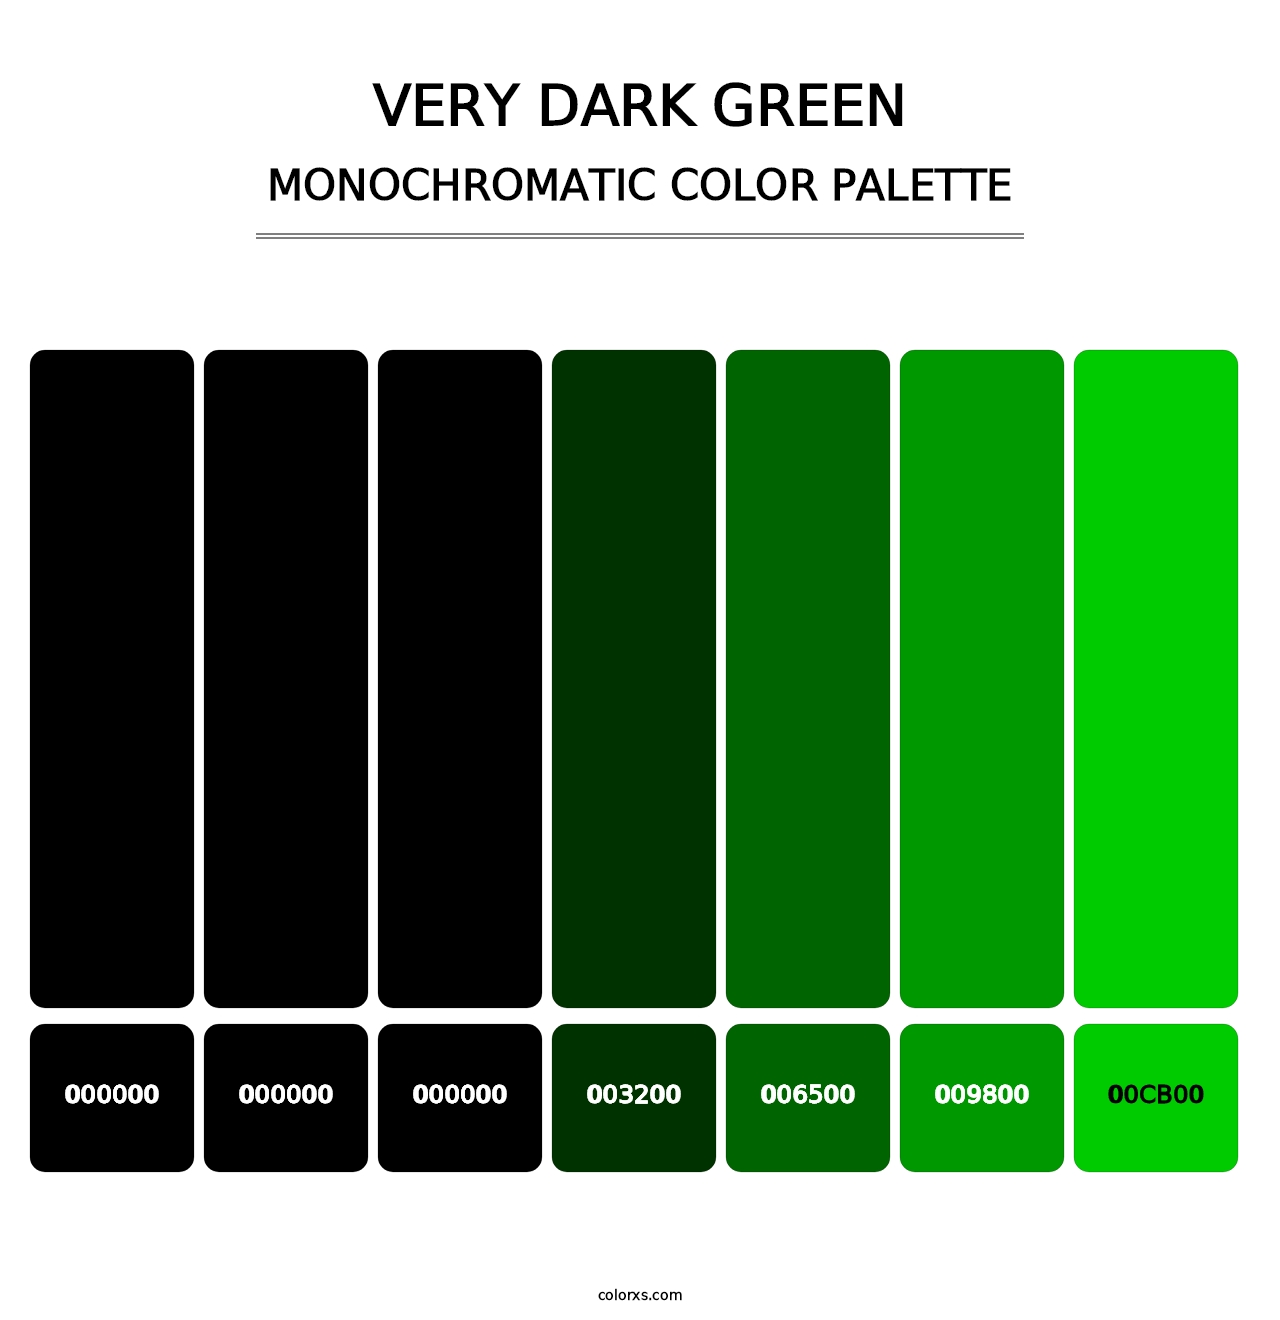 Very Dark Green - Monochromatic Color Palette